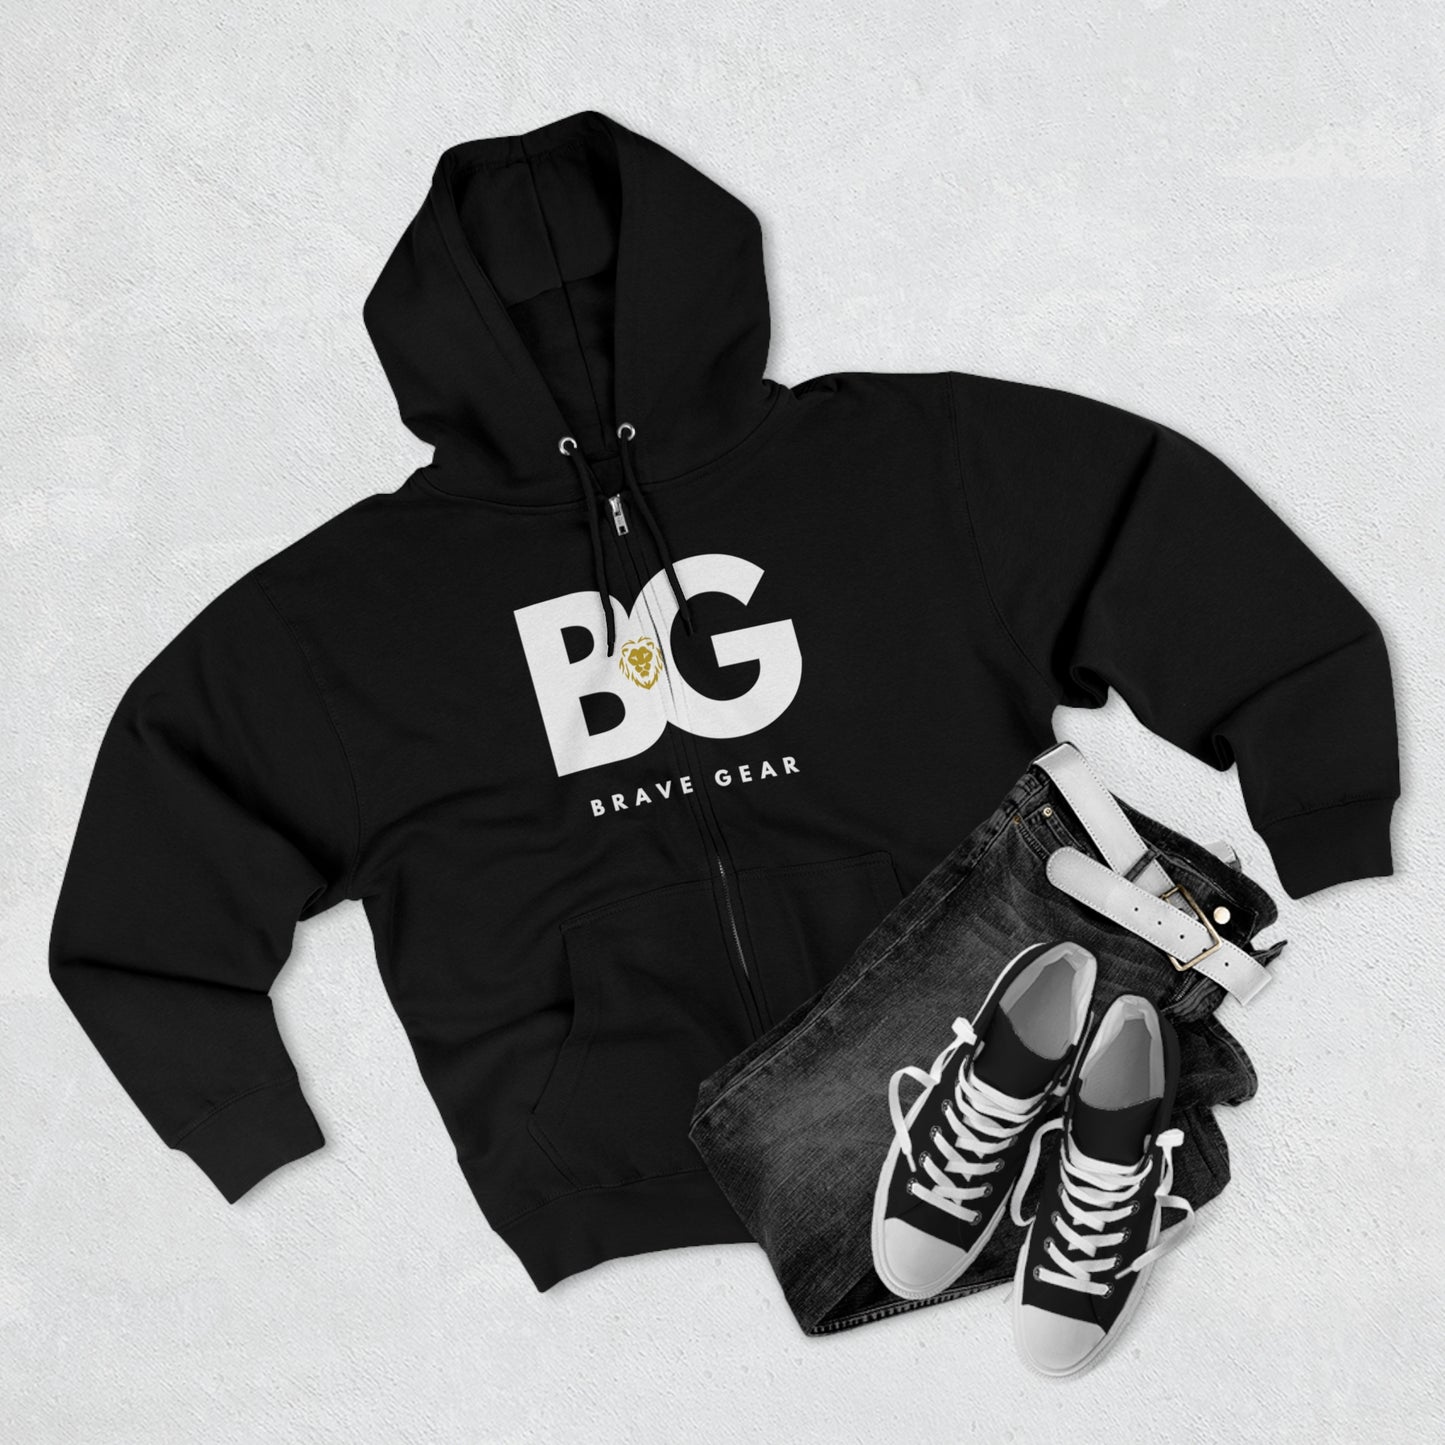 BG logo Premium Full Zip Hoodie